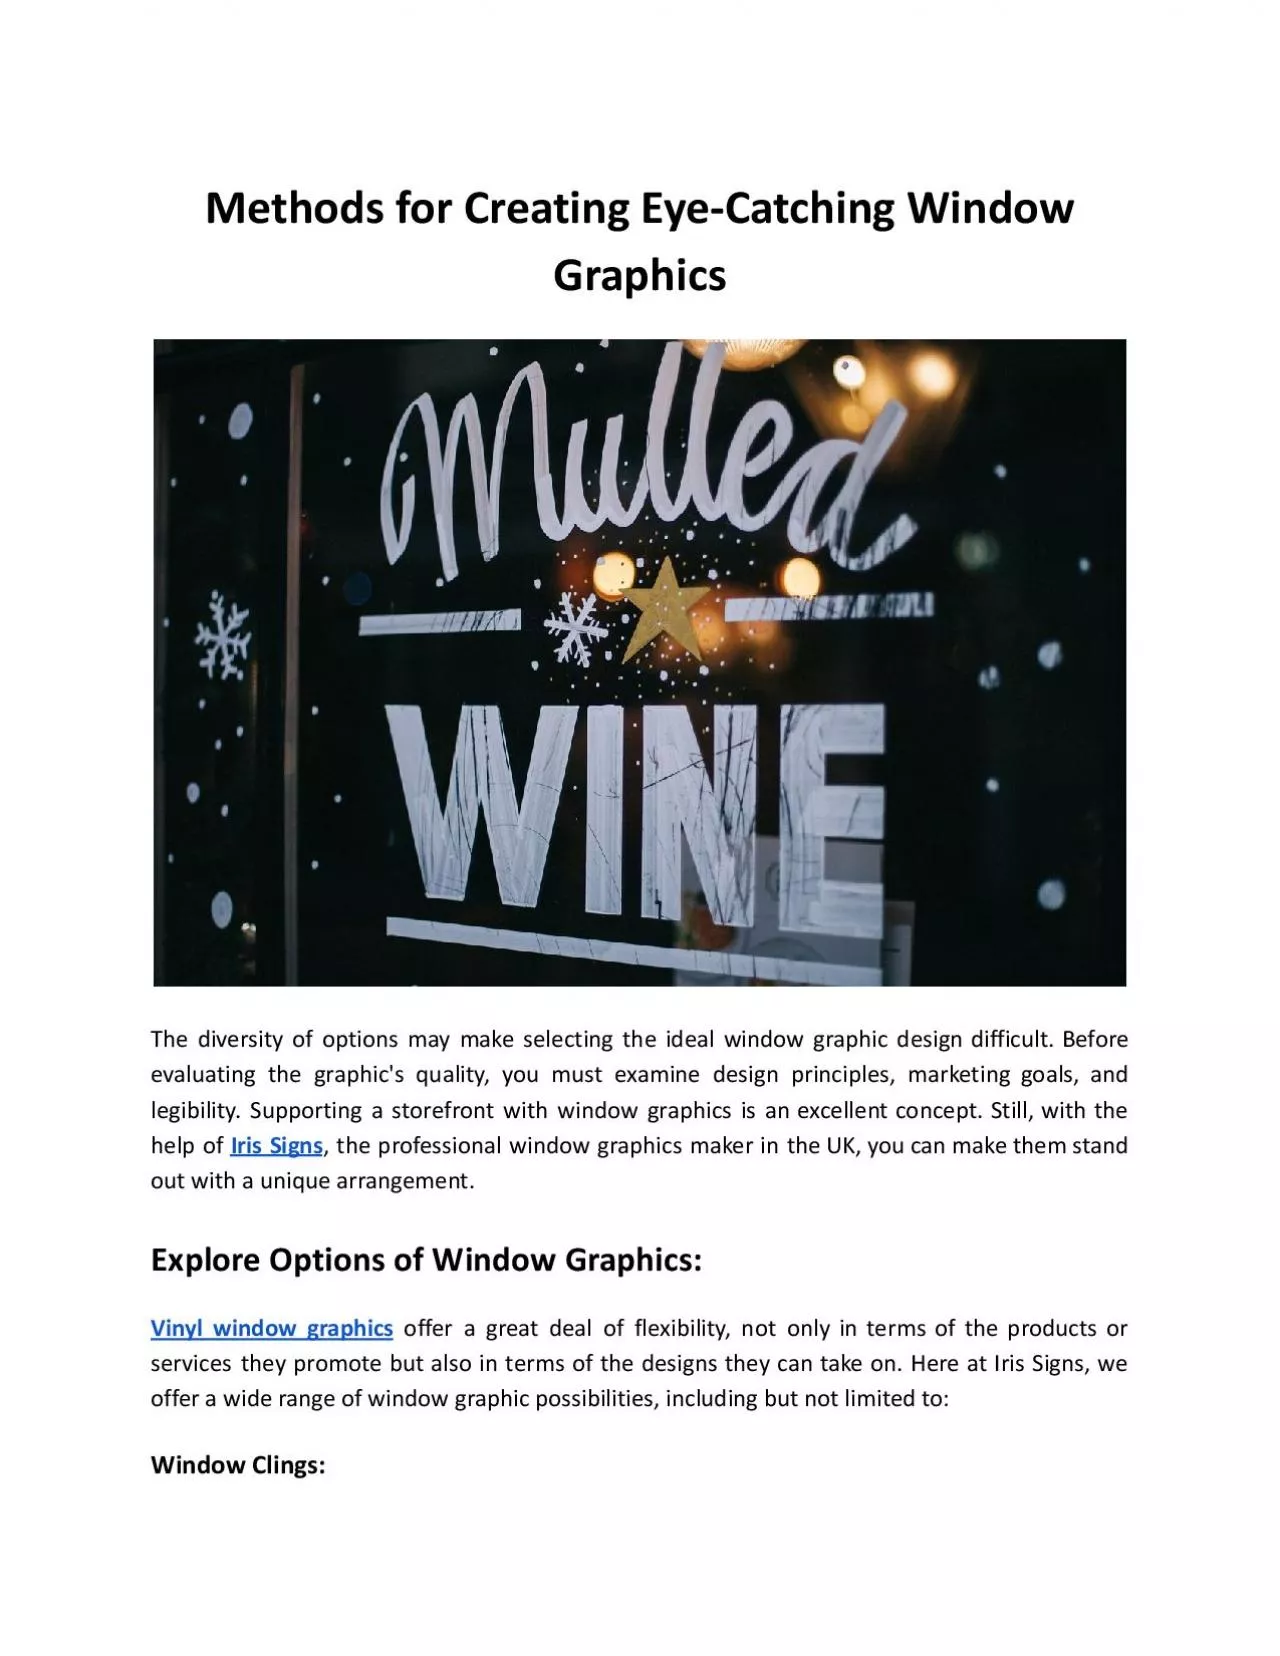 Methods for Creating Eye-Catching Window Graphics - Iris Signs